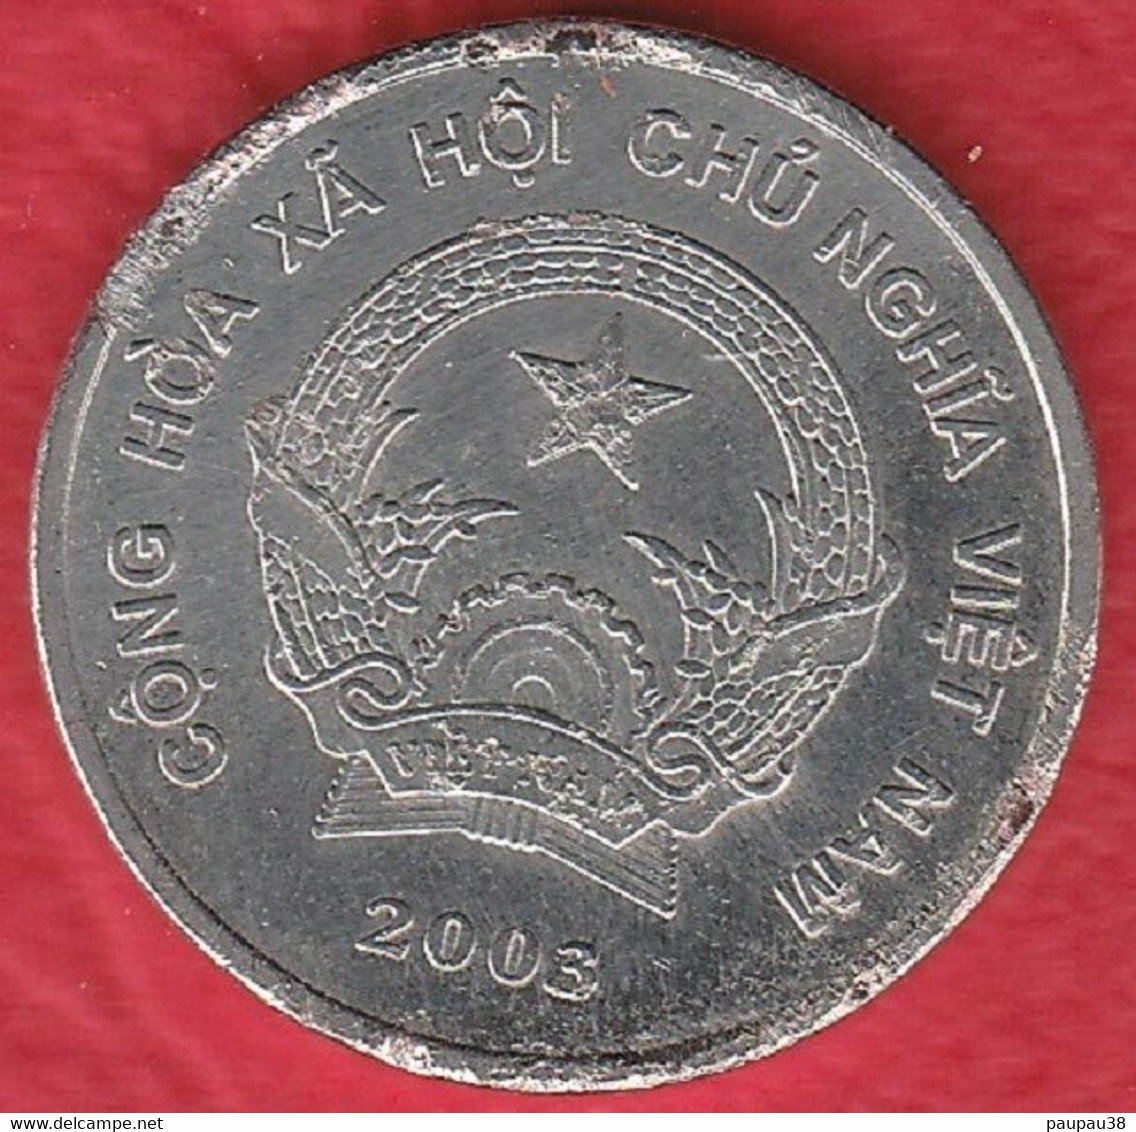 N° 49 - MONNAIE VIET NAM 200 DONG 2003 - Viêt-Nam